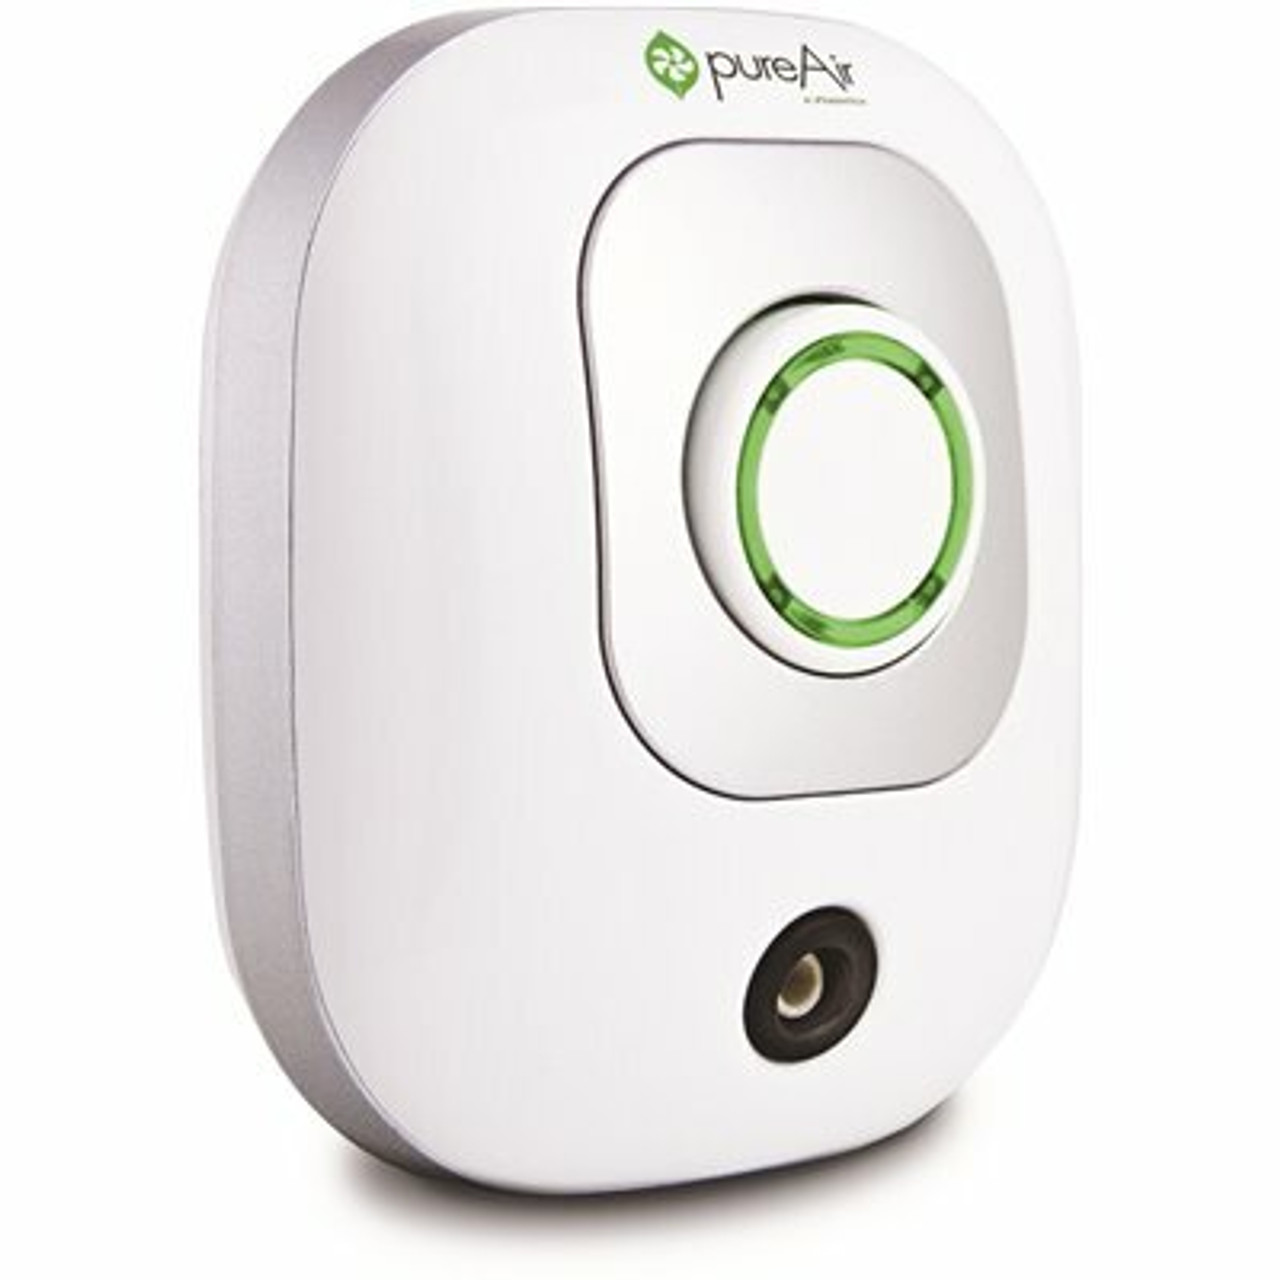 Greentech Environmental Compact, Portable, Plug-In Air Purifier